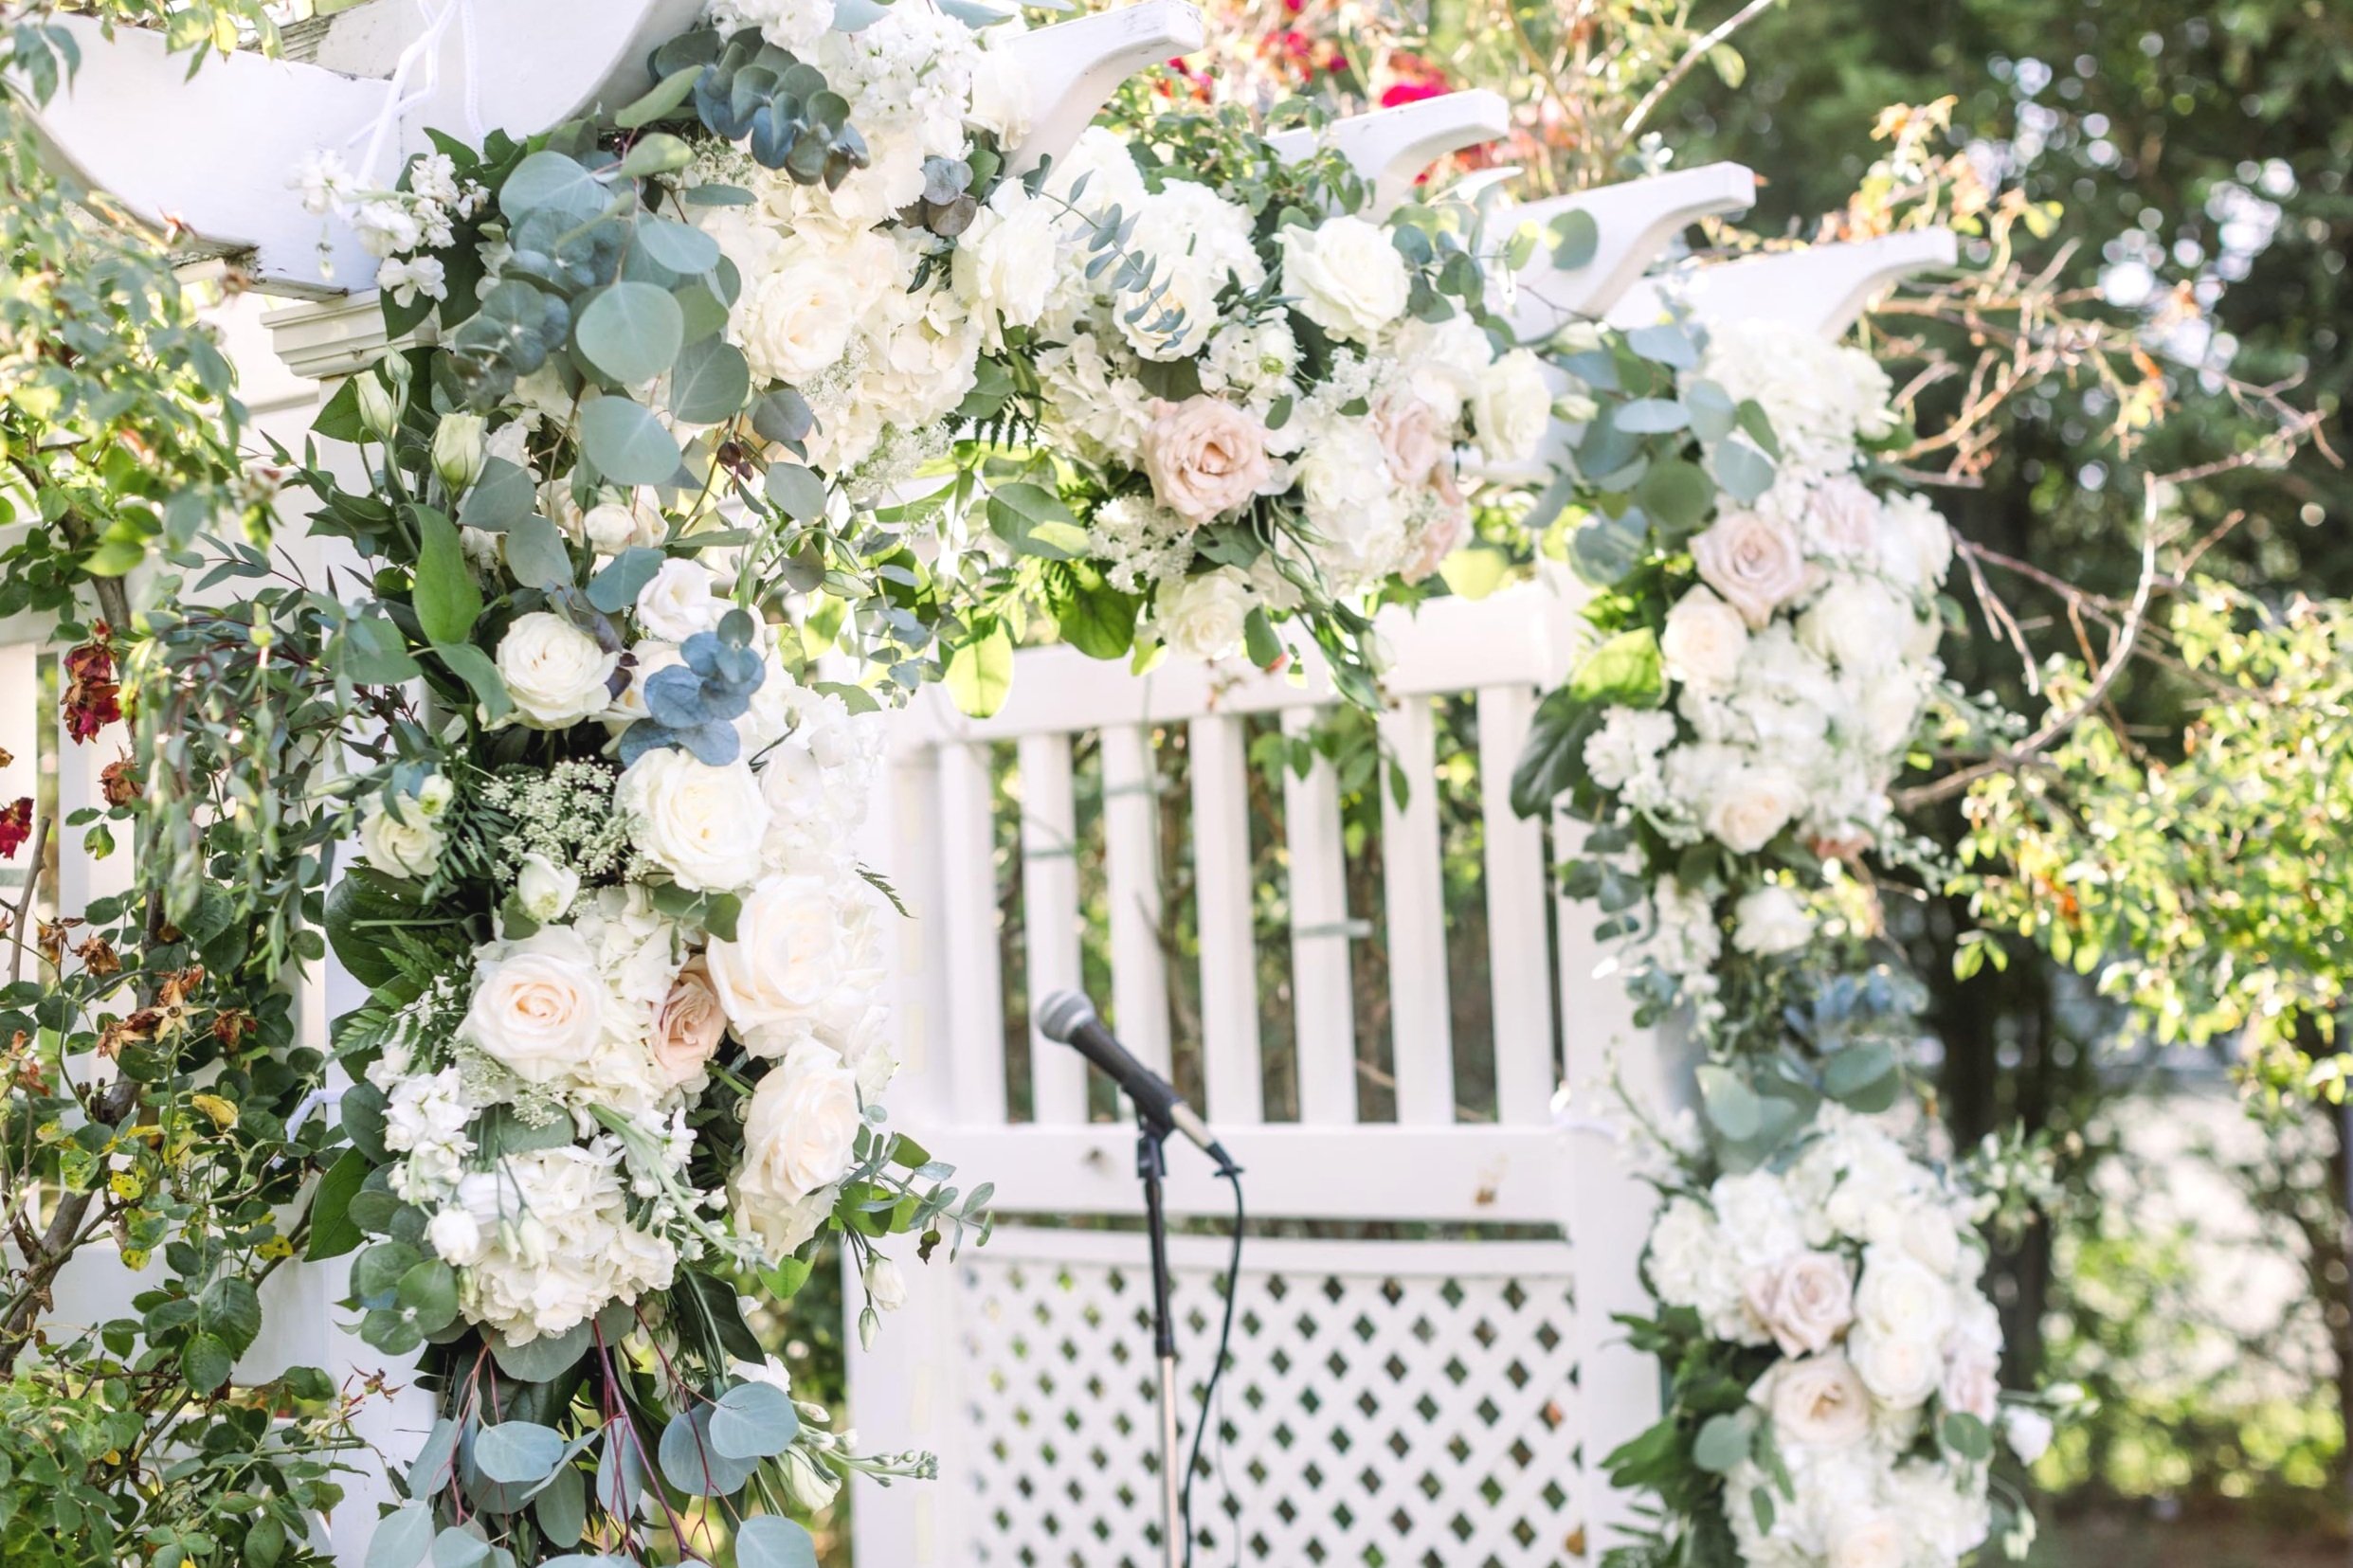 hengstenbergs-florist-weddings-love-story-marley-alex-%C2%A9OliviaCainePhotography-003.jpg